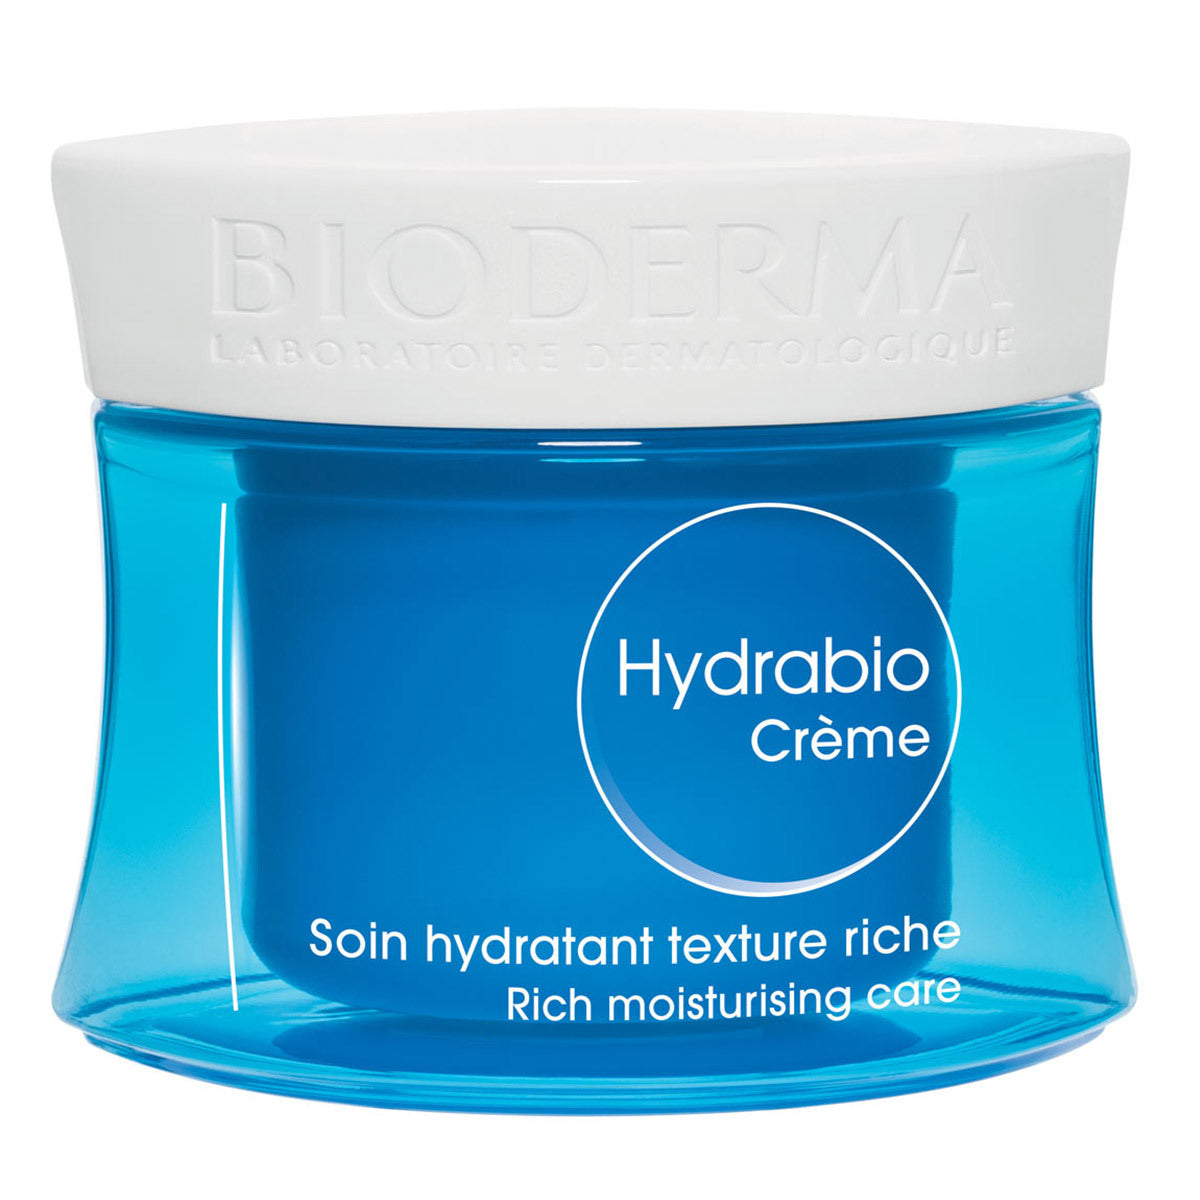 Primary image of Hydrabio Cream